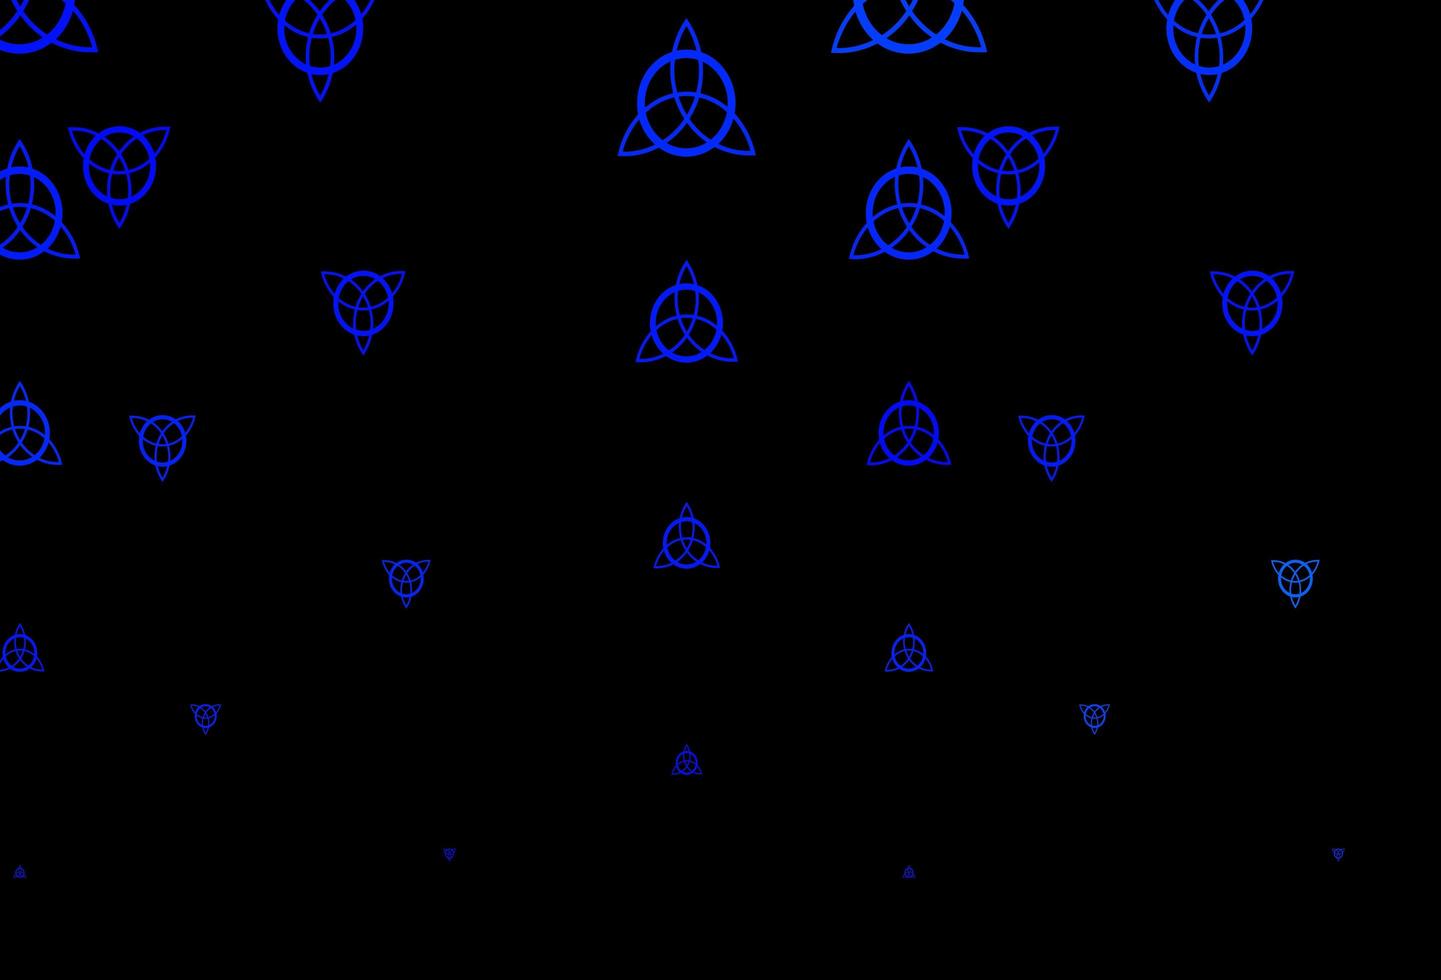 Dark BLUE vector background with occult symbols.